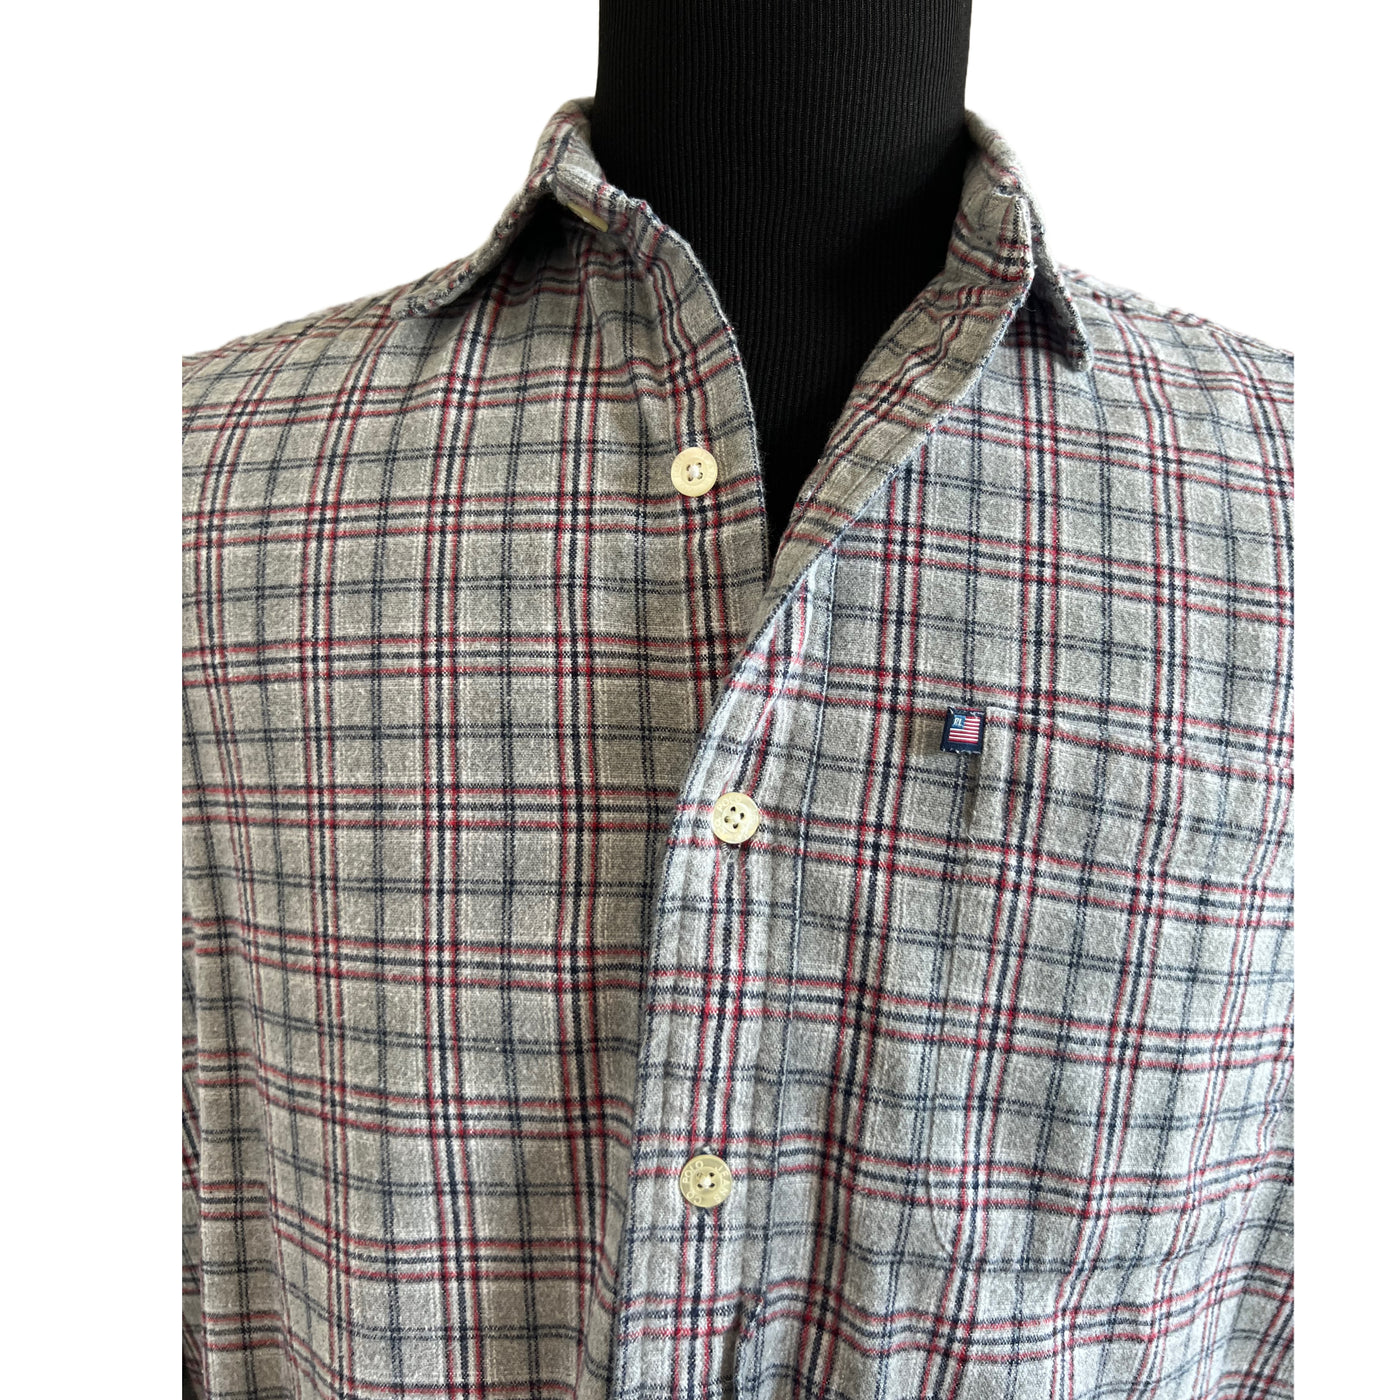 Vintage Ralph Lauren Long Sleeve Gray Plaid Shirt. Heavy Cotton